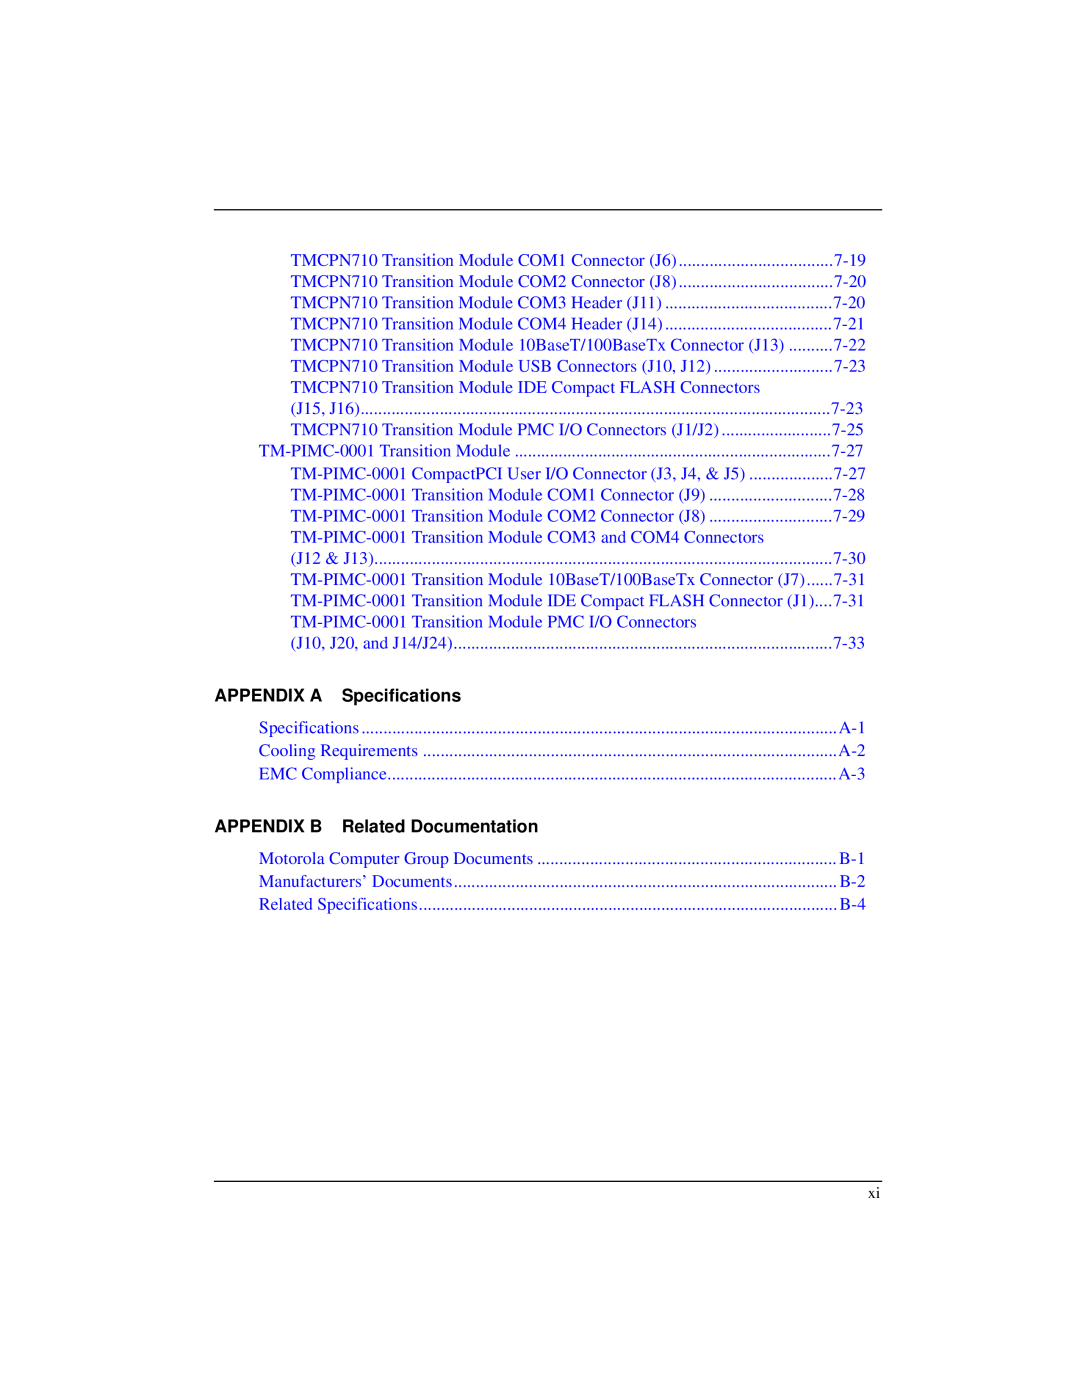 Motorola IH5, MCPN750A manual Appendix A, Specifications, Appendix B, Related Documentation 